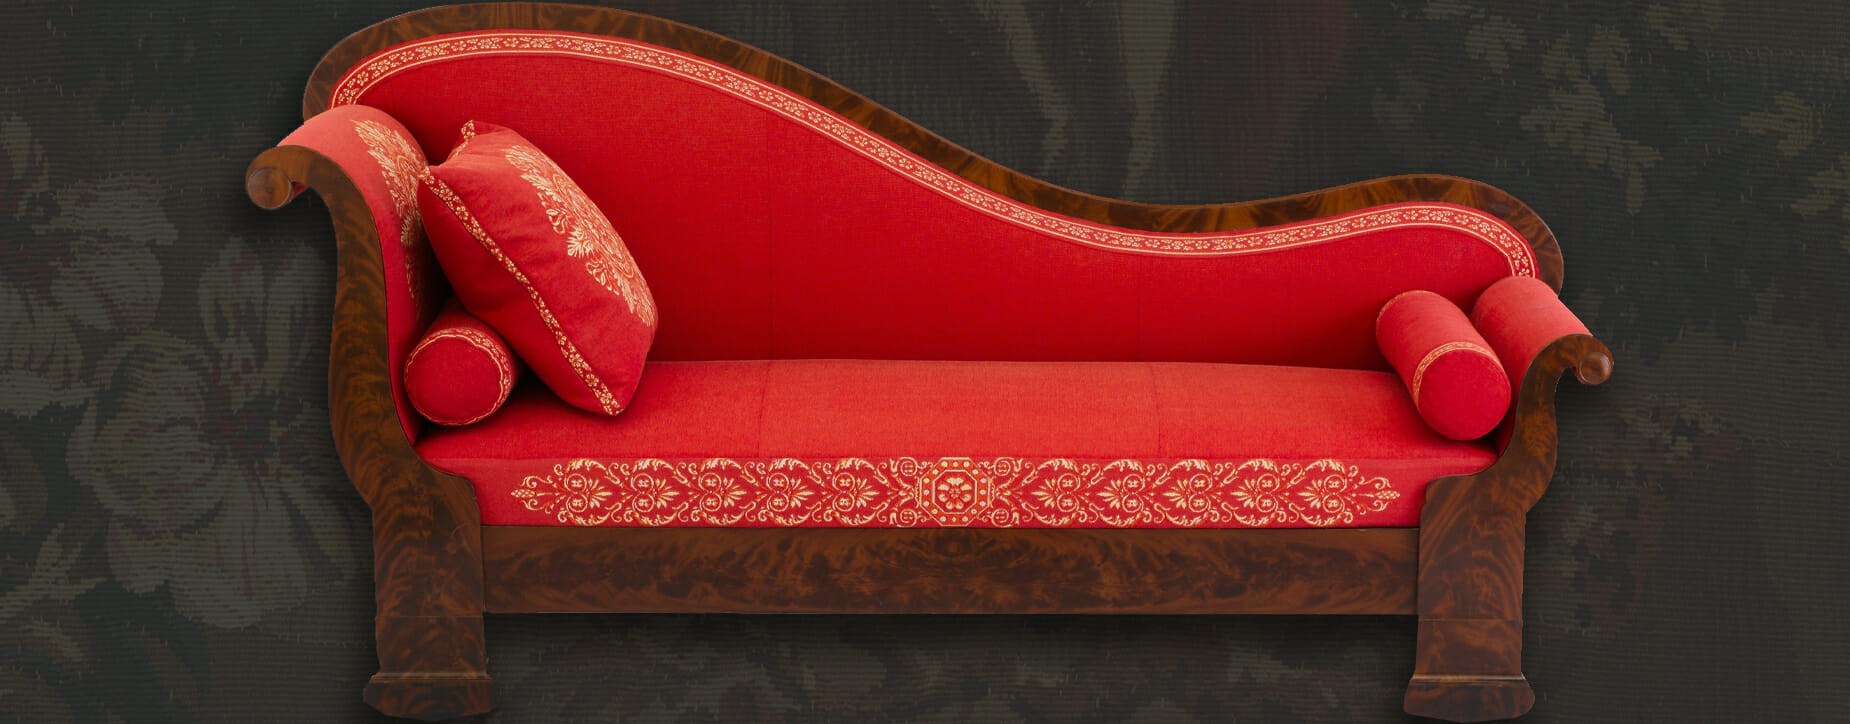 neoclassical furniture settee